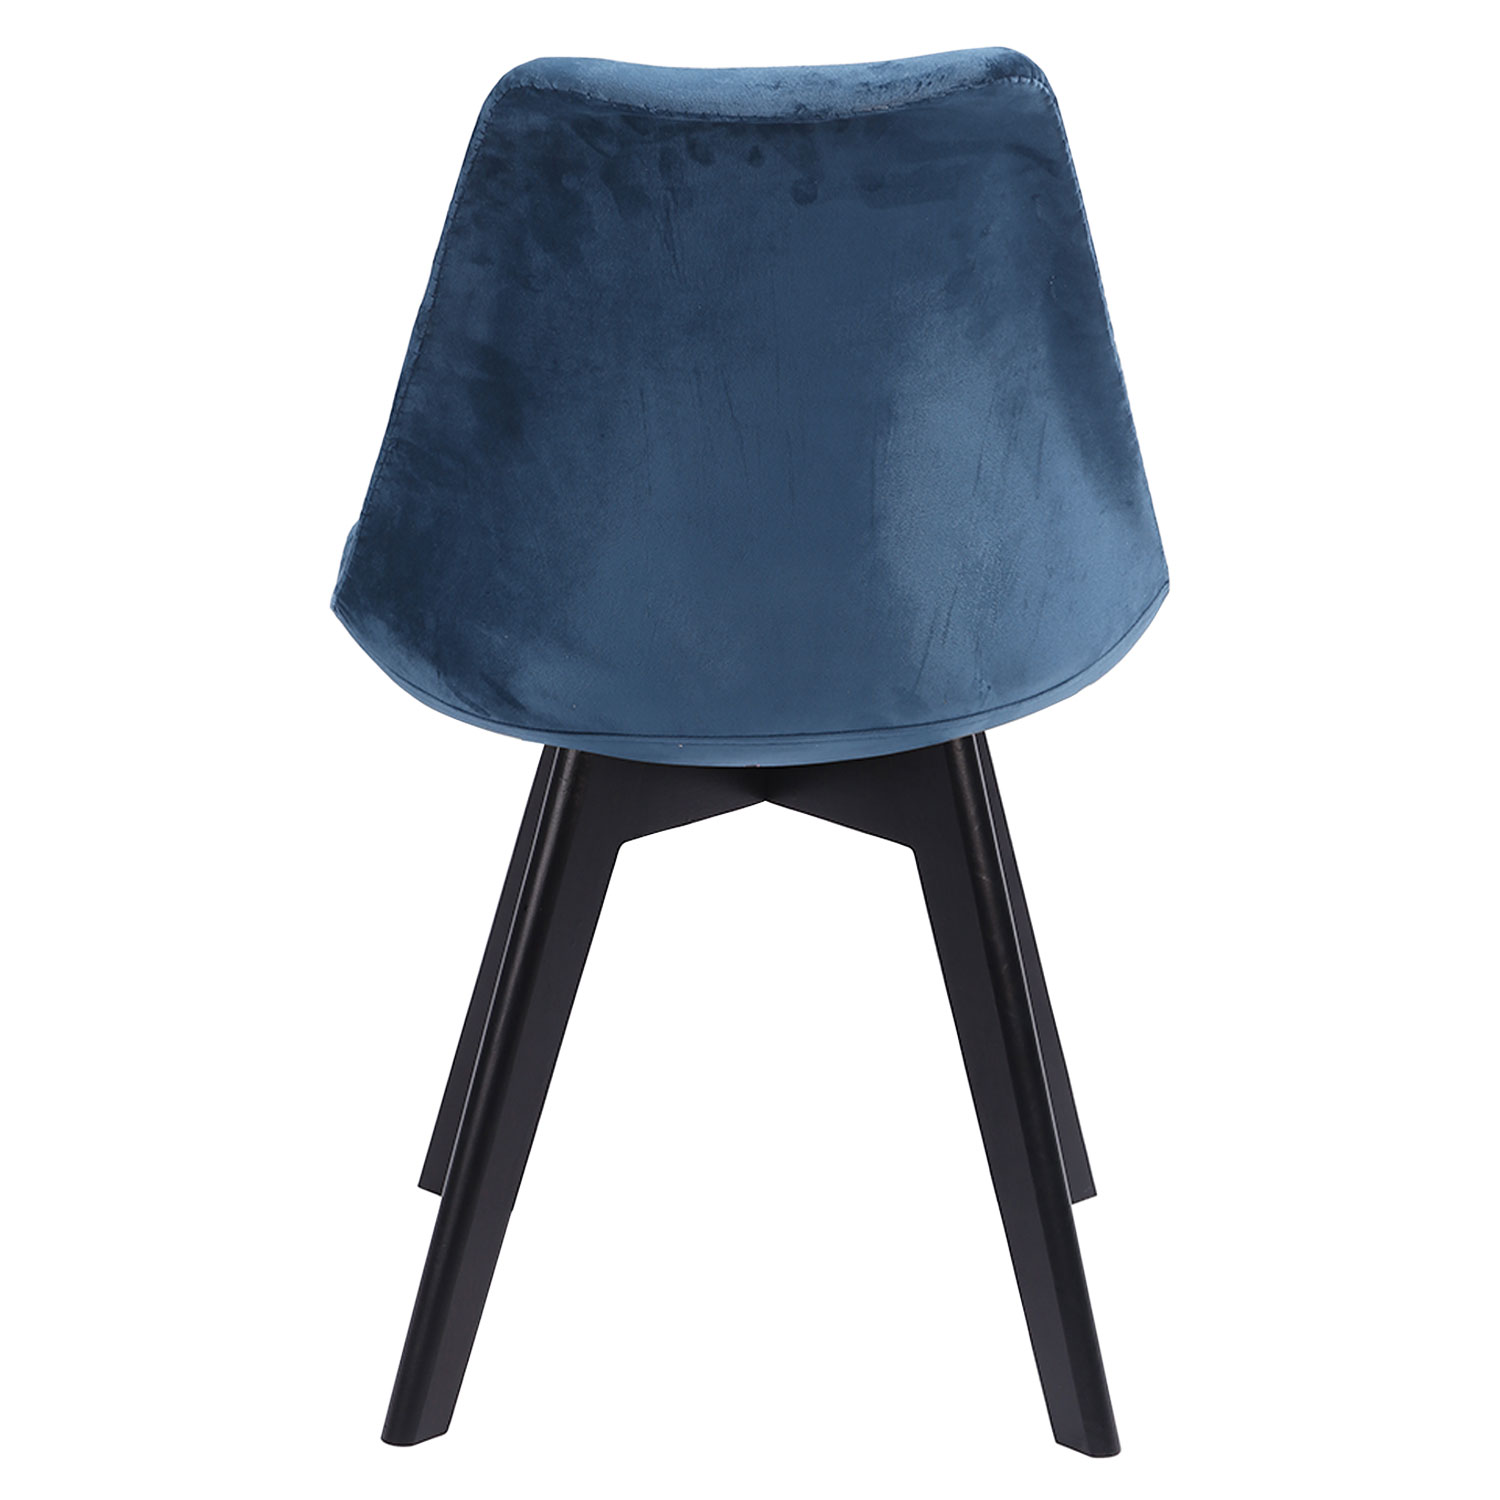 Conjunto de 4 cadeiras de veludo azul NORA com almofada